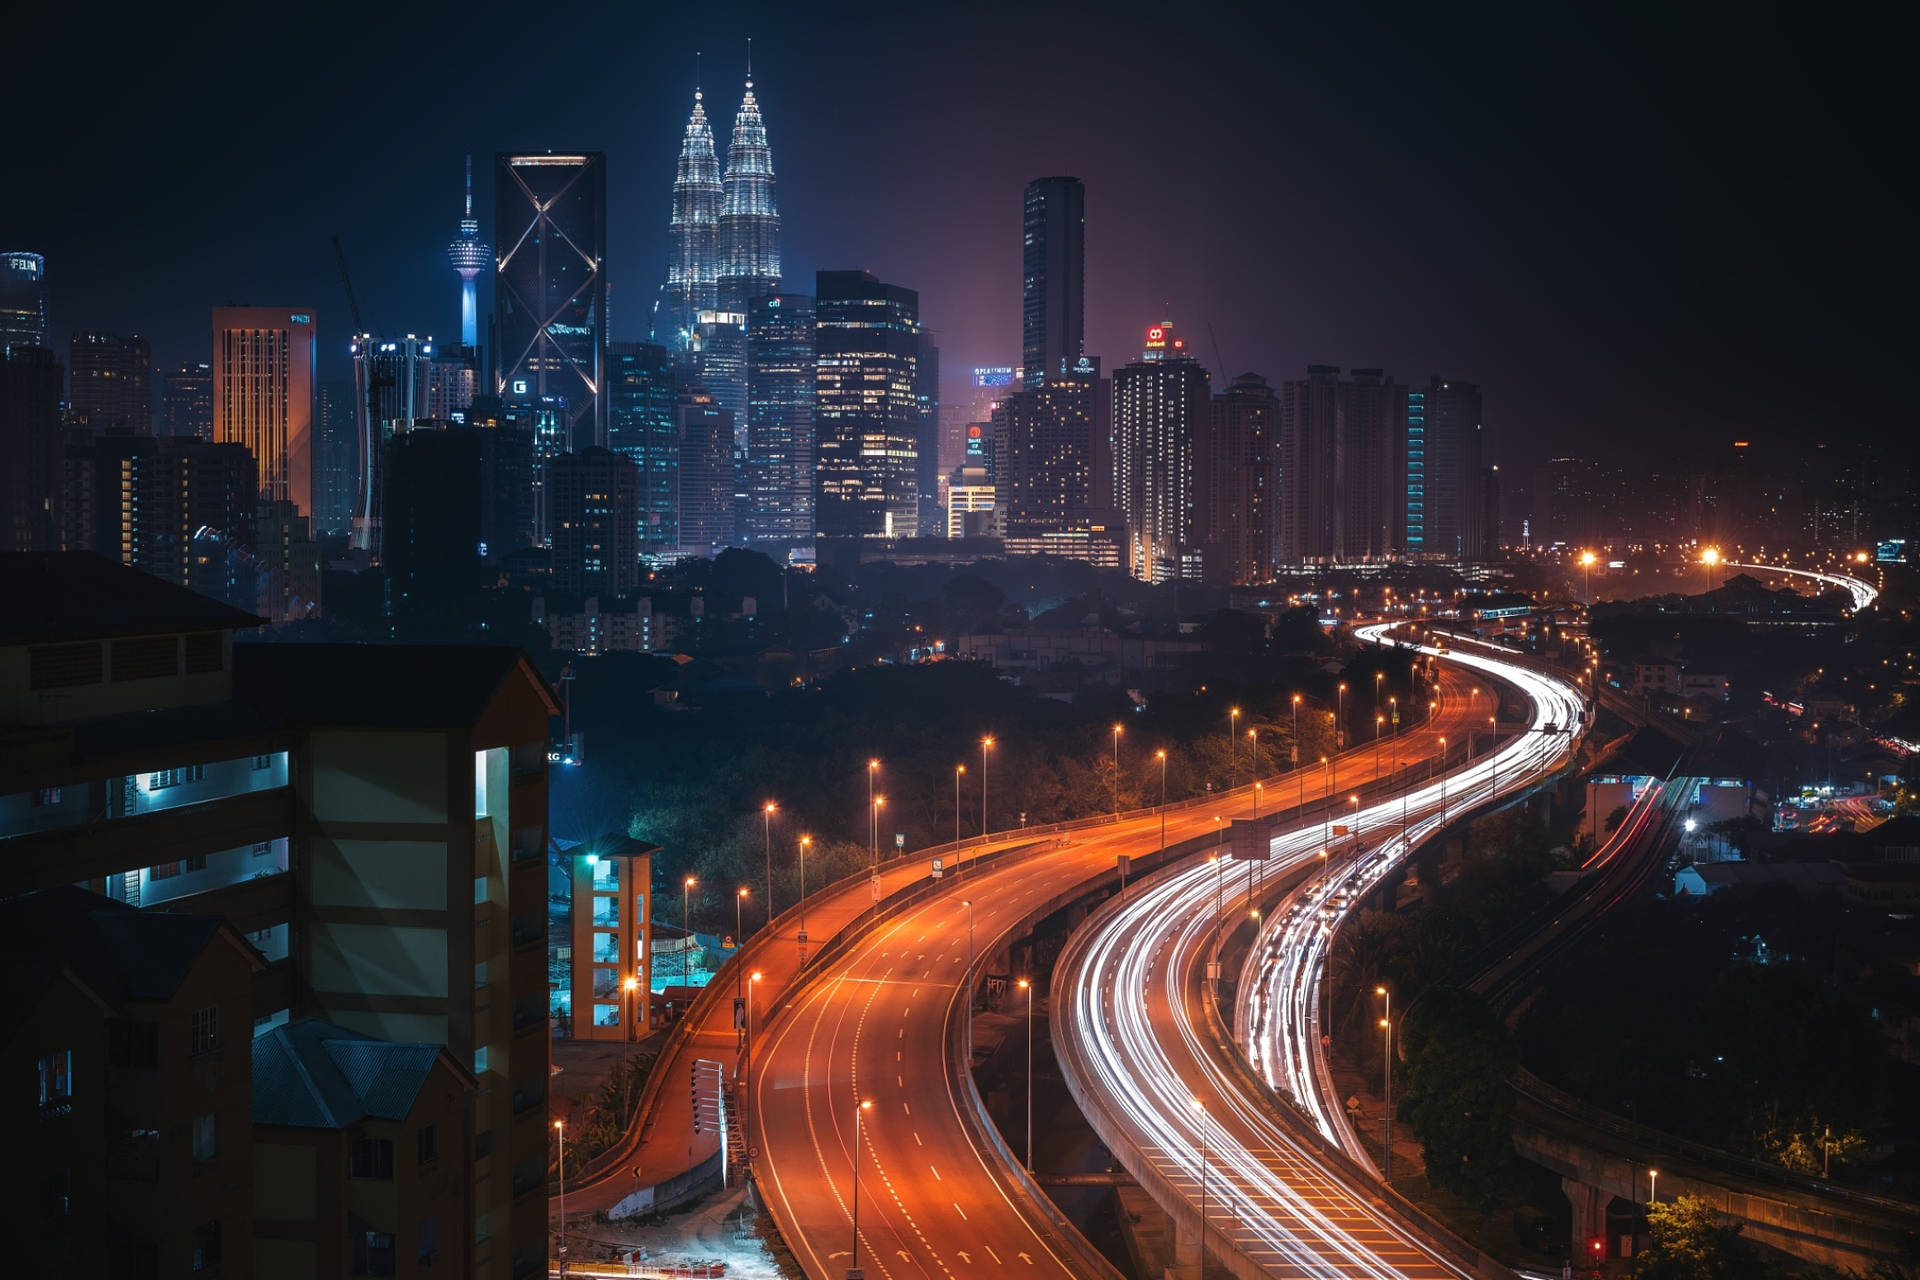 Tapet af Kuala Lumpur City Lights: Se smukke tapet af Kuala Lumpur midnat skyline. Wallpaper